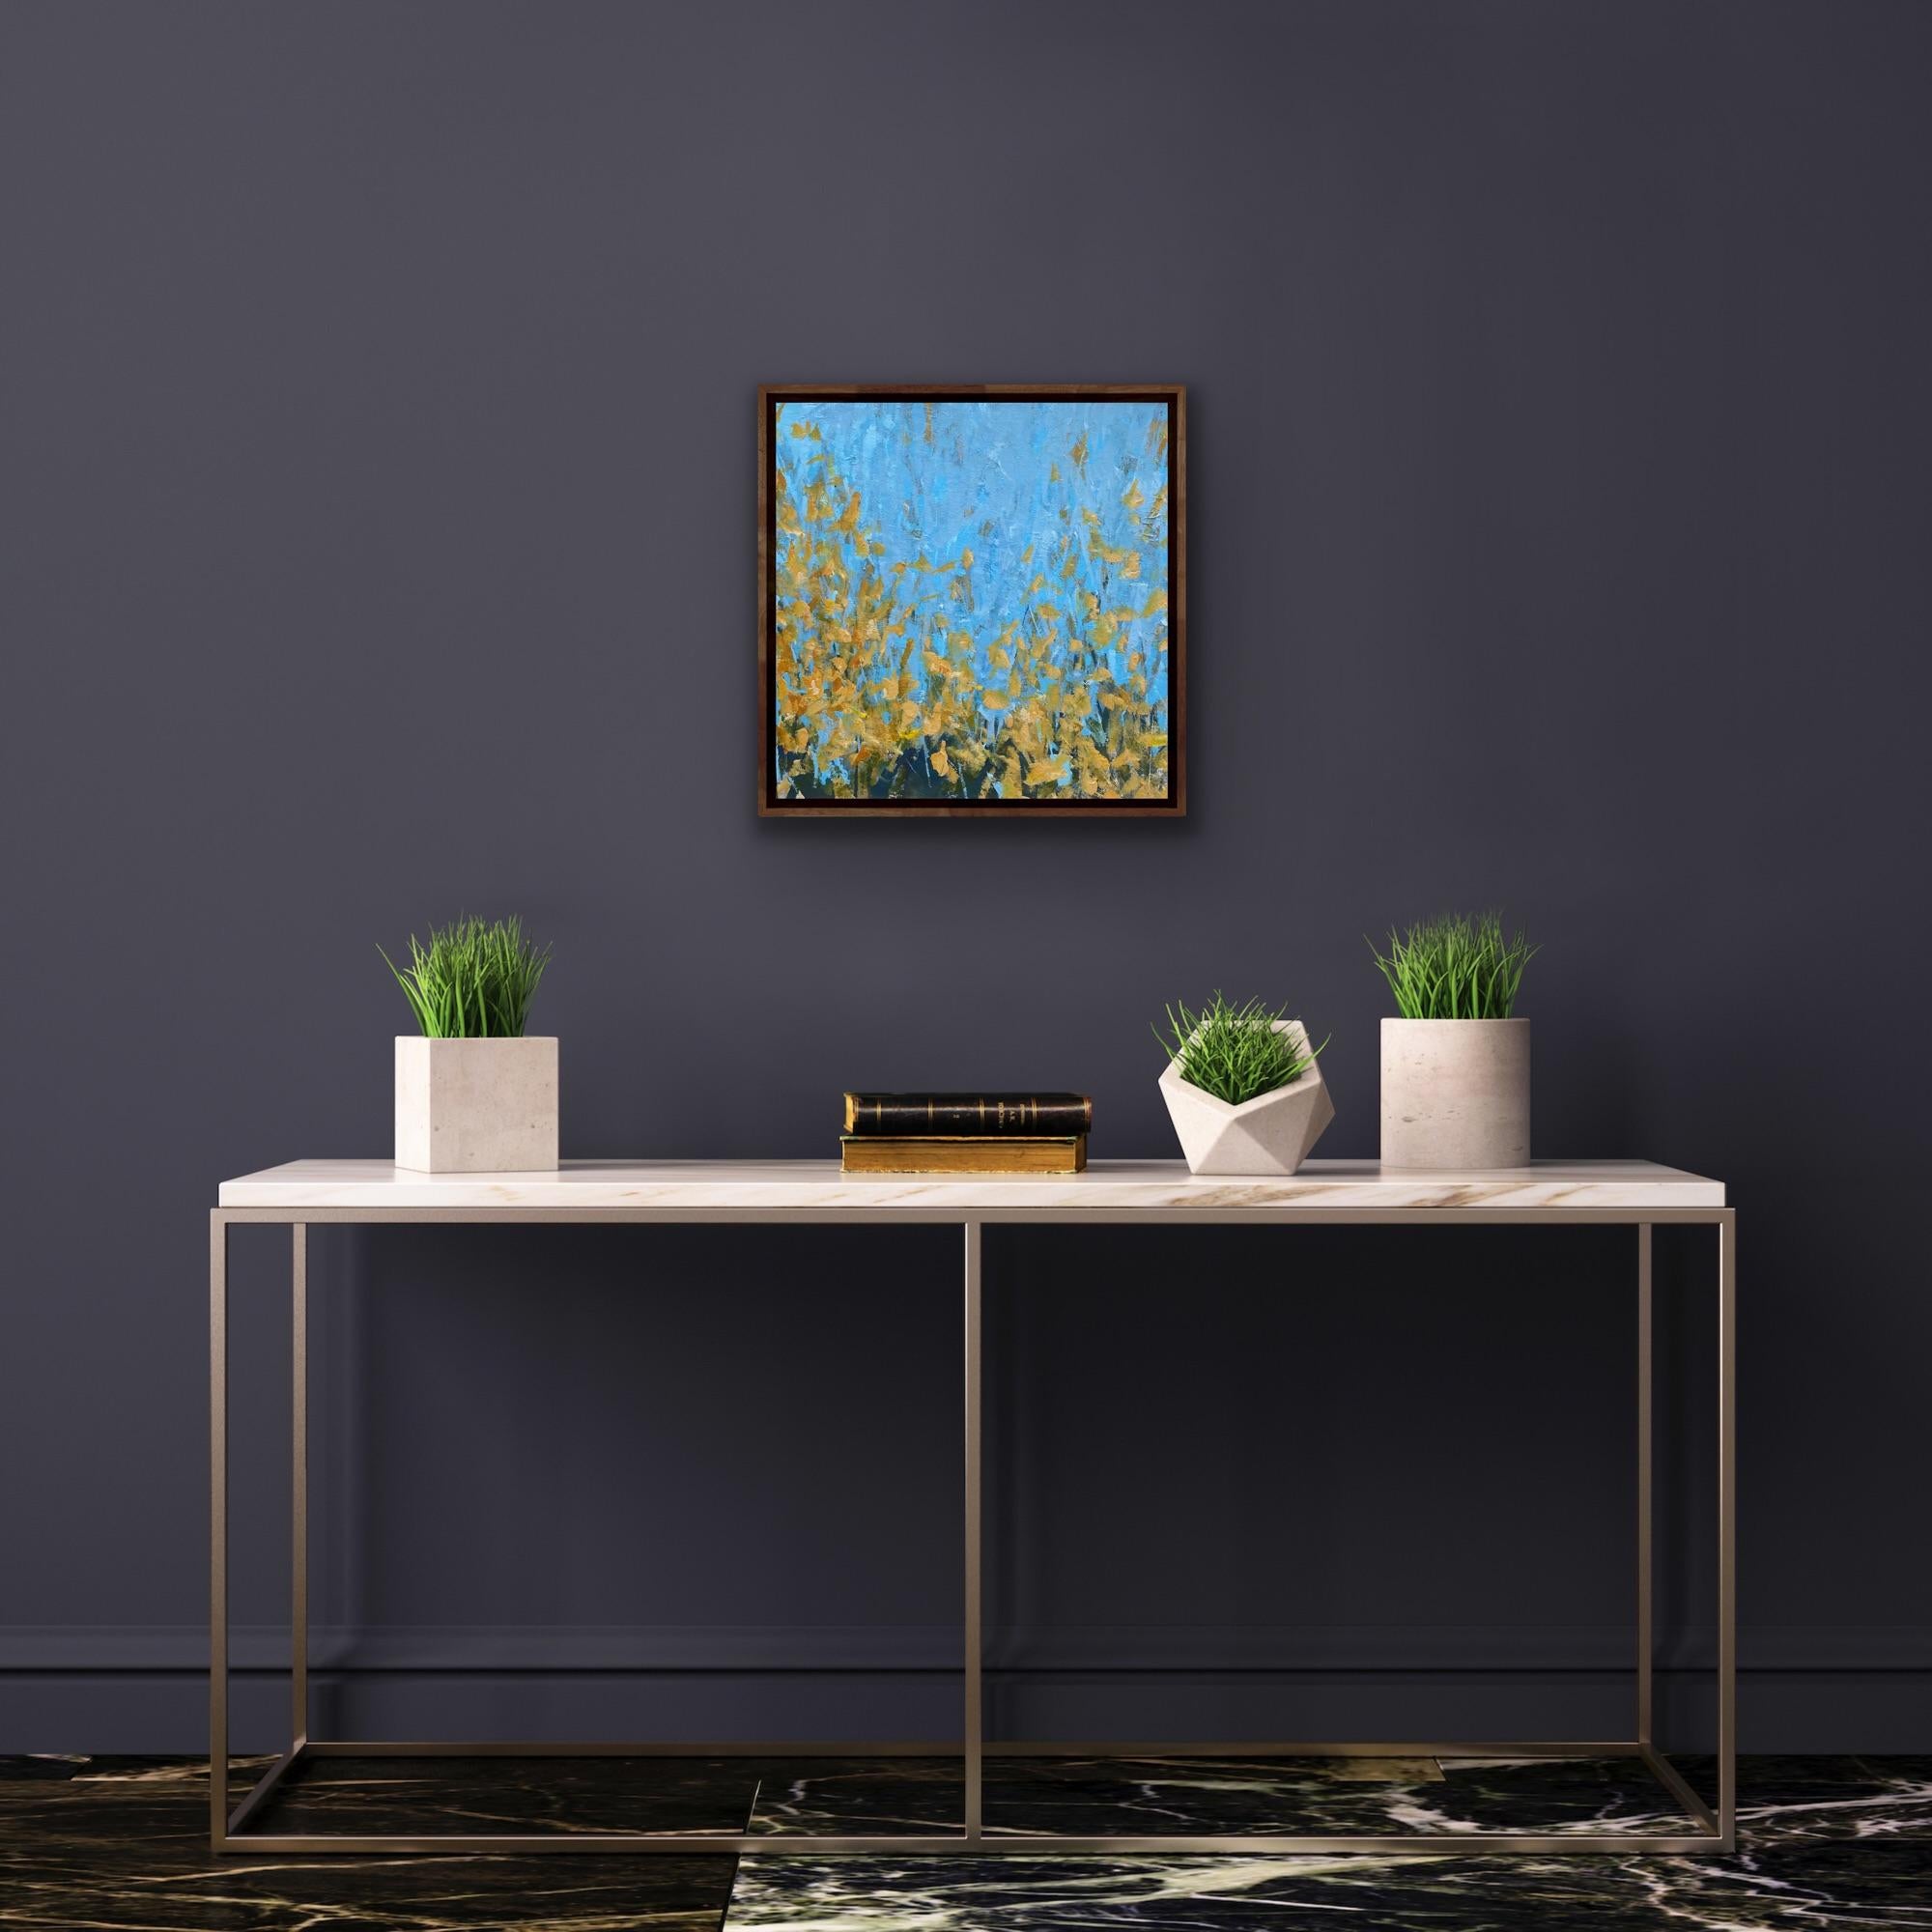 Gorse 2, Jo Cottam, Abstract painting, original painting, floral art for sale - Blue Abstract Painting by Jo Cottam 